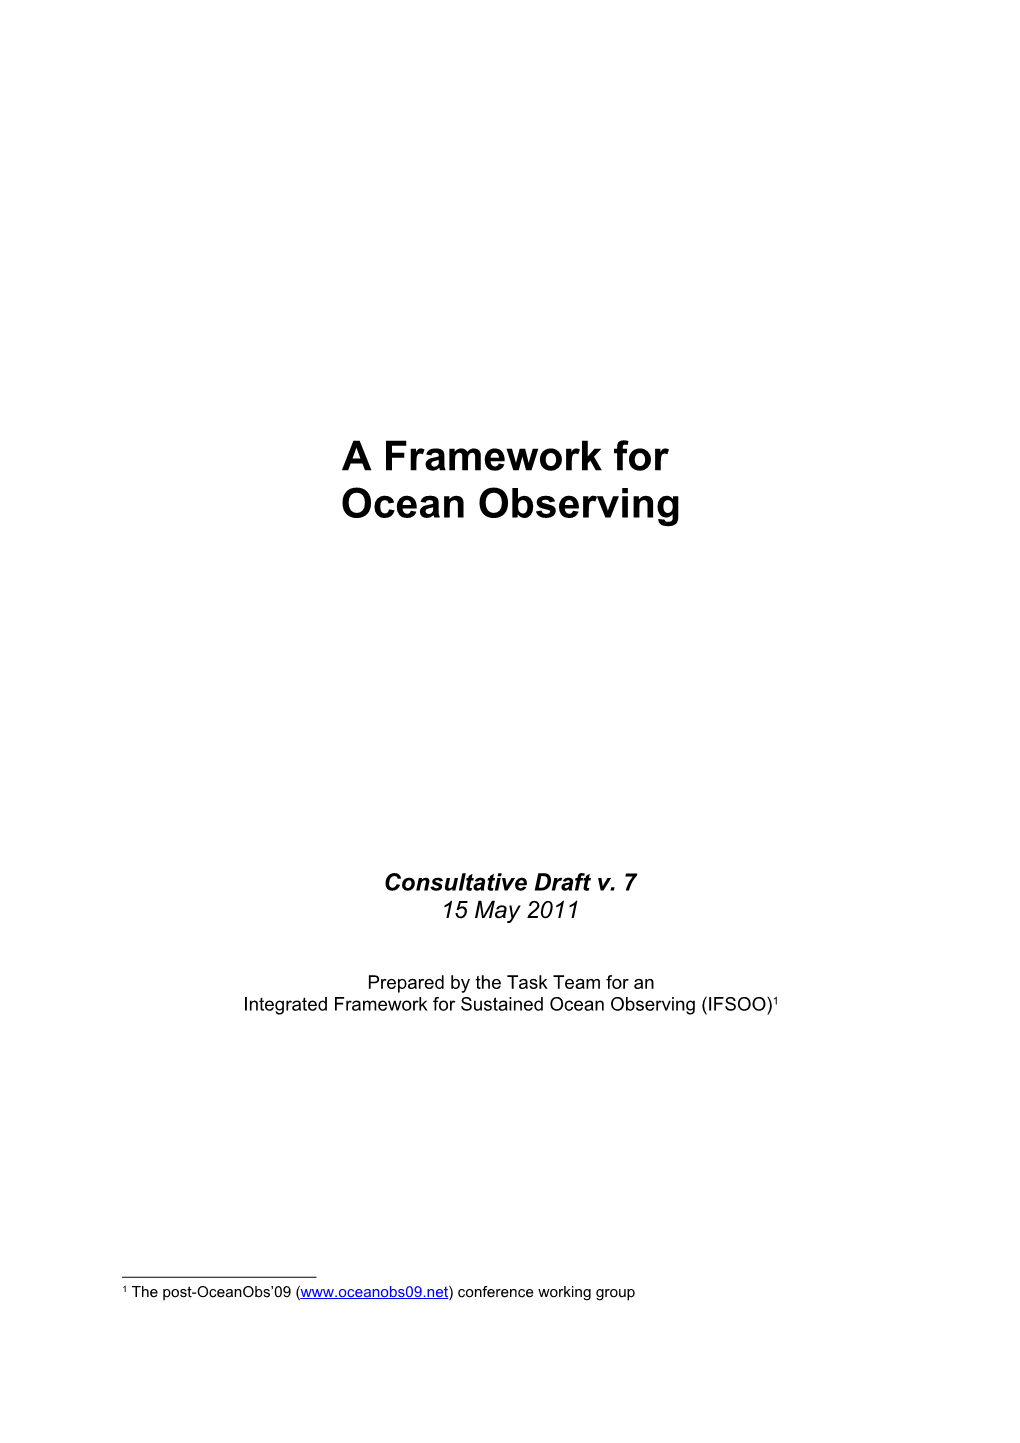 A Framework for Ocean Observing, Consultative Draft V.7, 15 May 20111